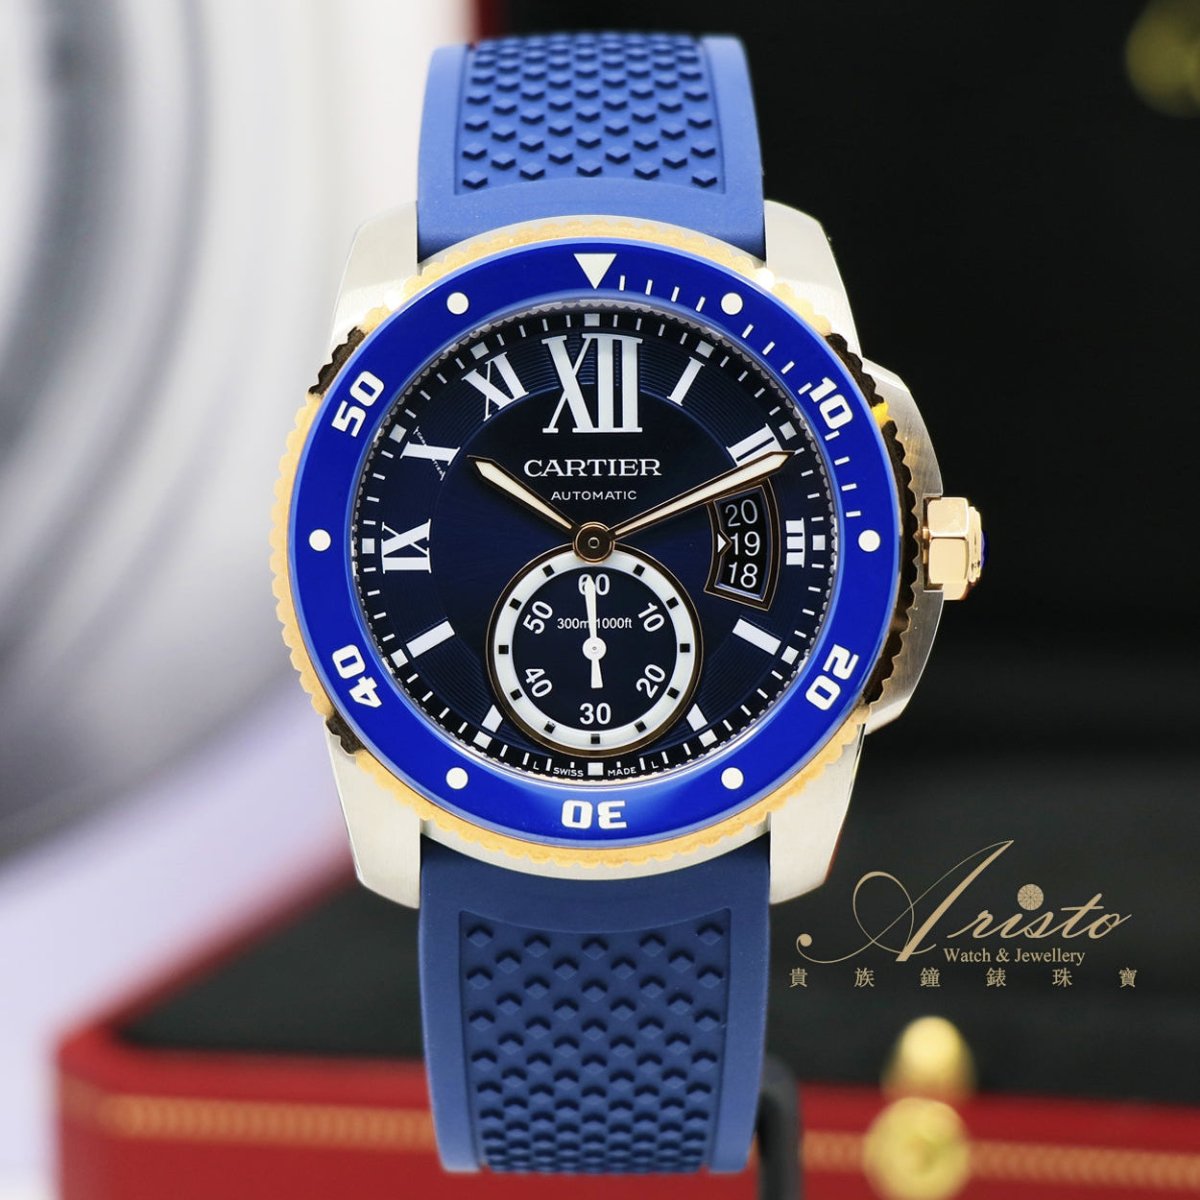 Cartier W2CA0009 Calibre- Aristo Watch & Jewellery